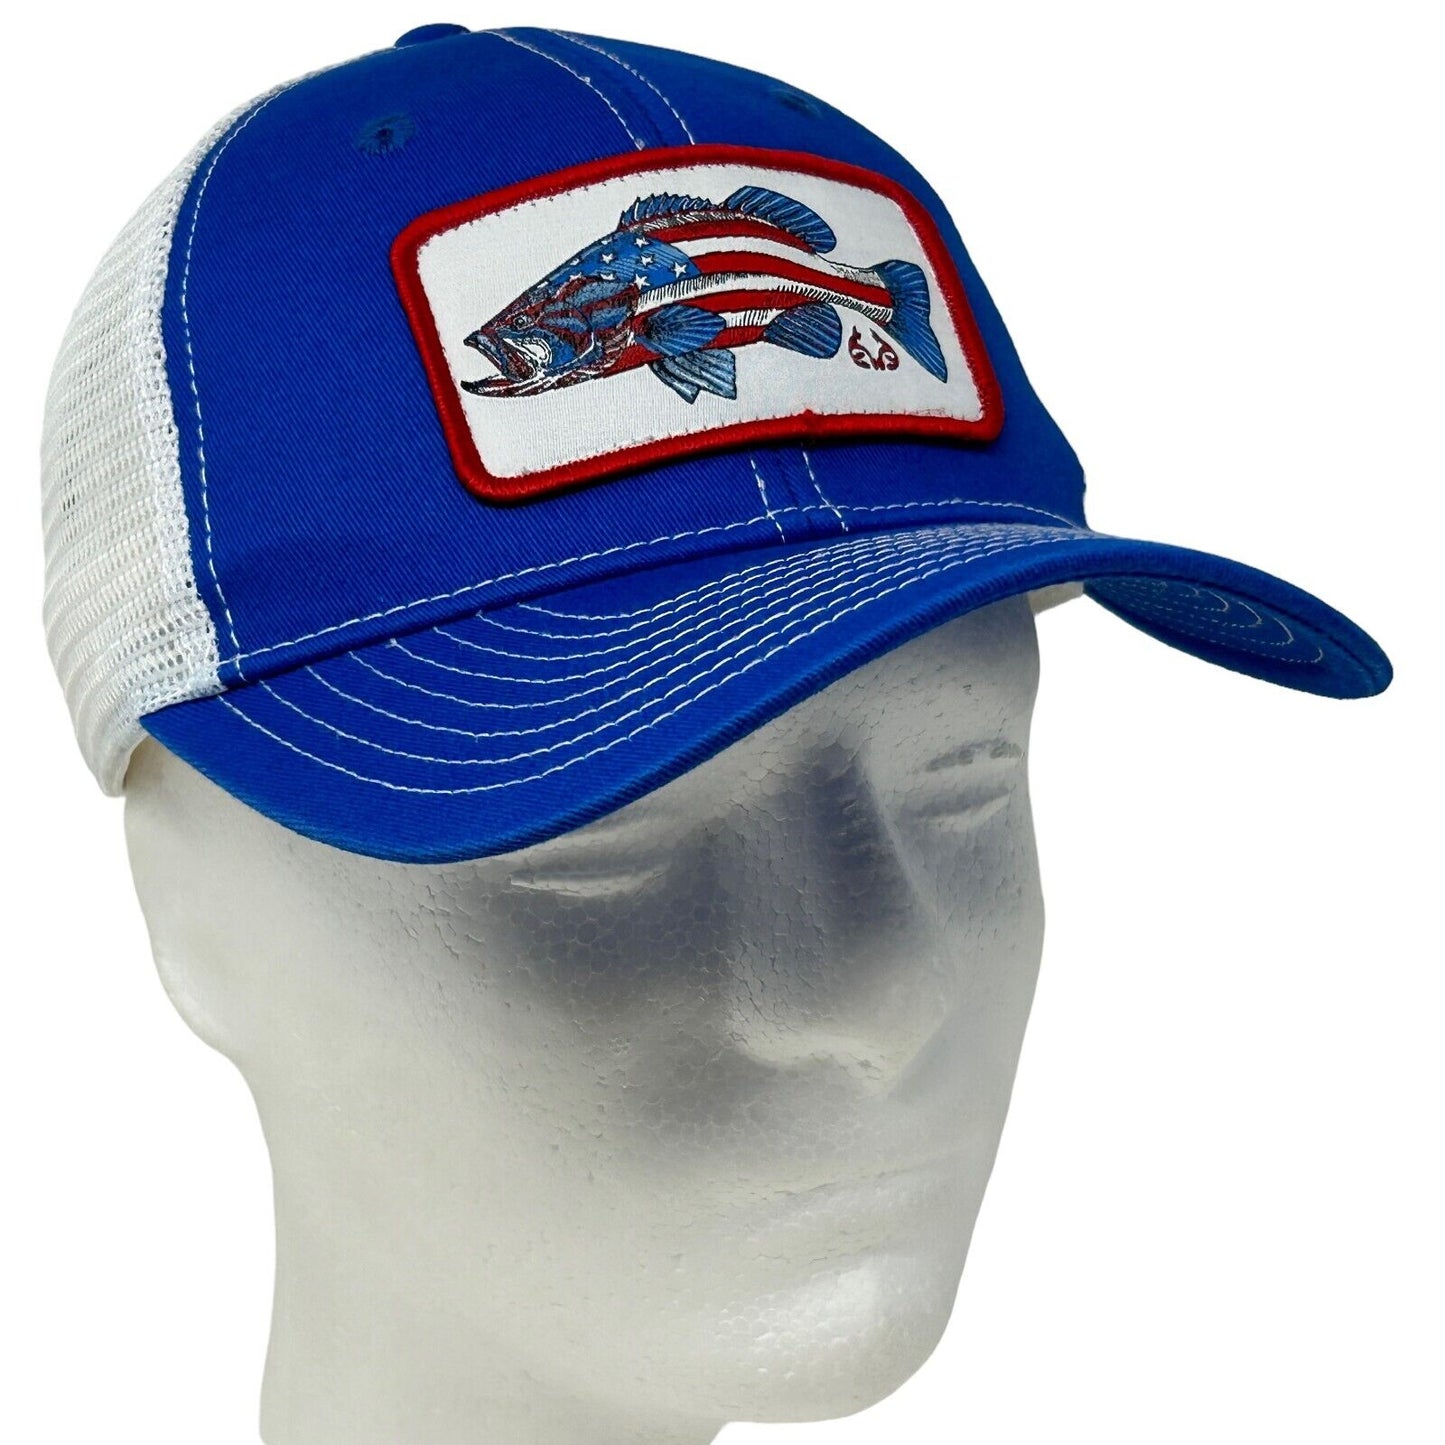 Realtree Patriotic Fishing Trucker Hat Fisherman Blue Mesh Snapback Baseball Cap